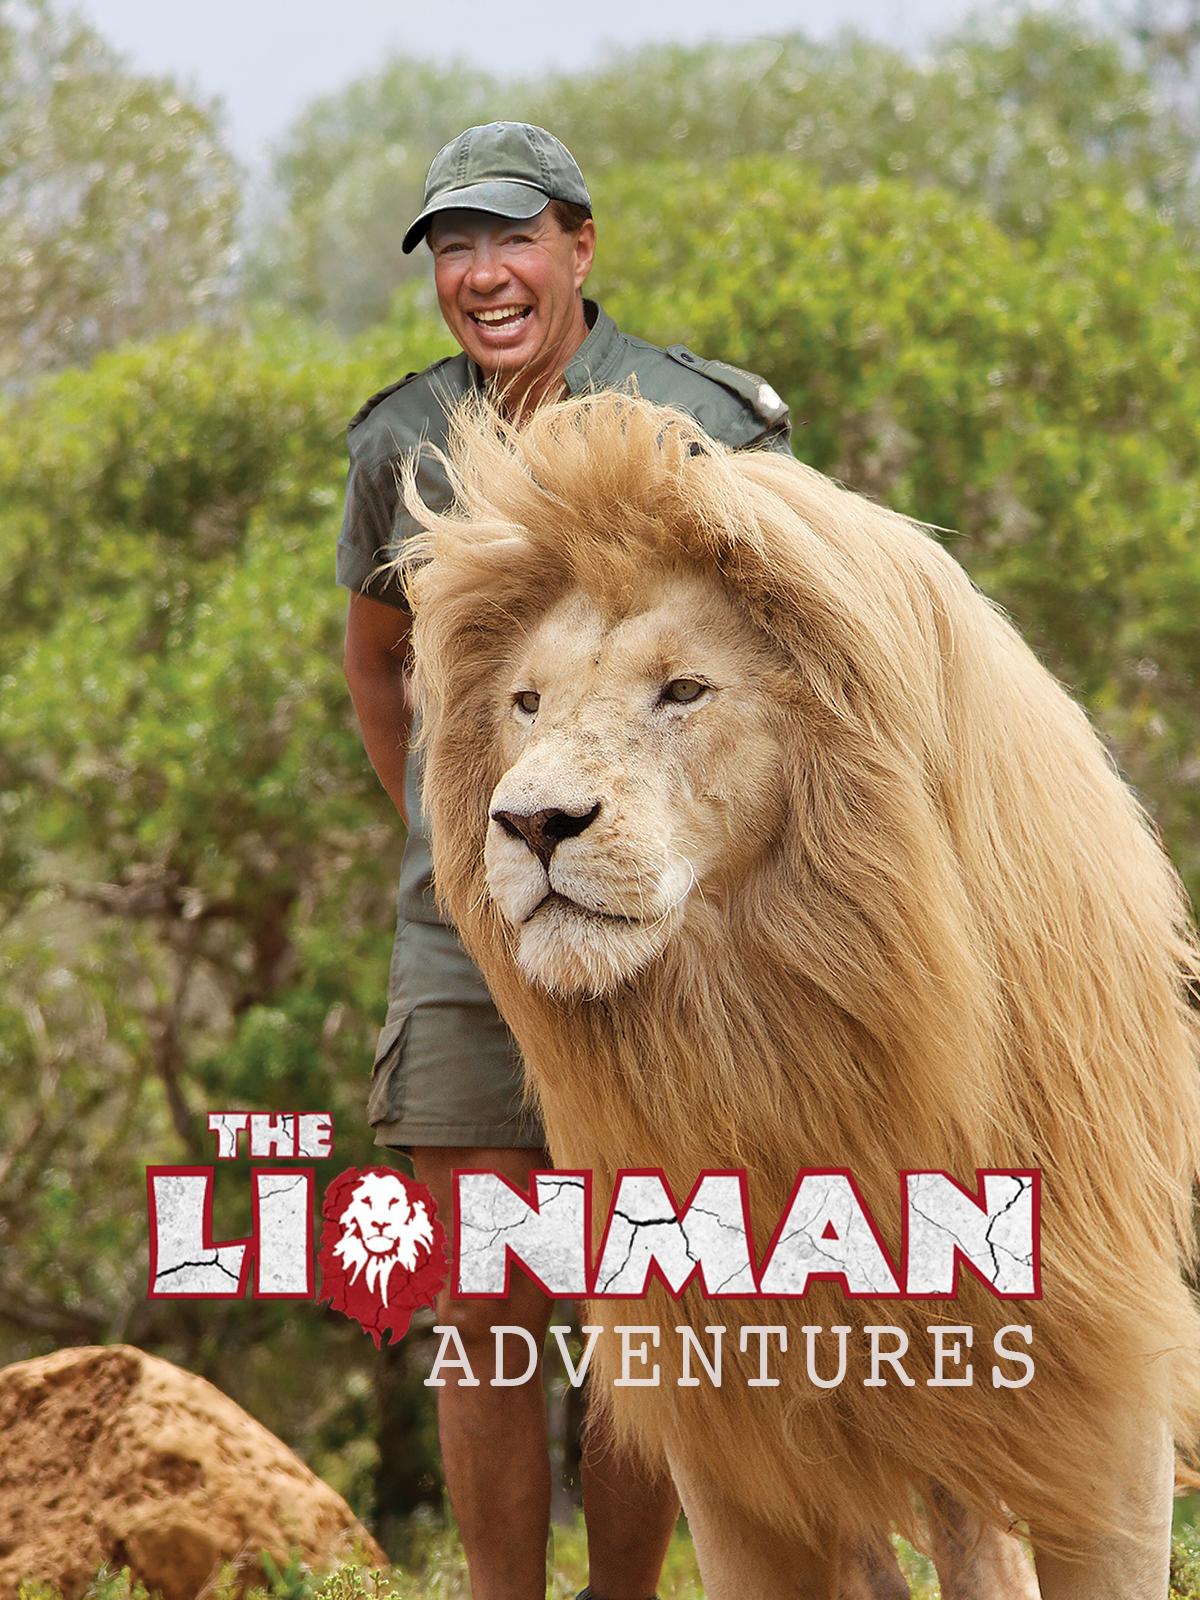 The Lion Man Adventures